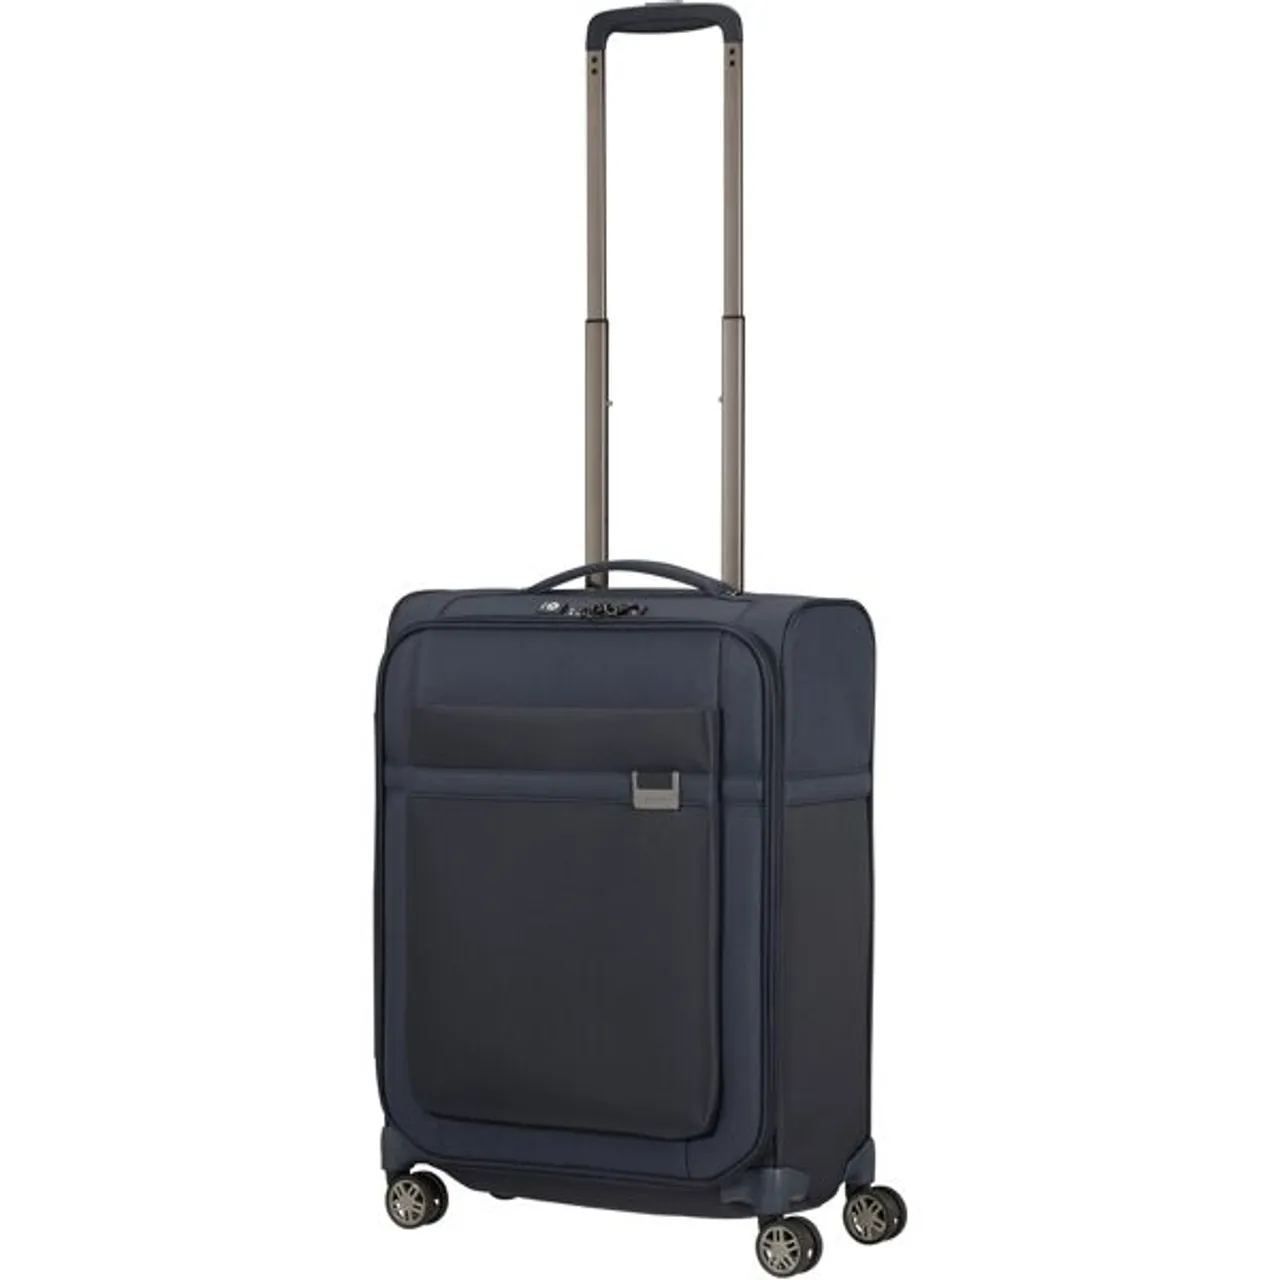 Weichgepäck-Trolley SAMSONITE "Airea, 55 cm" Gr. B/H/T: 40 cm x 55 cm x 20 cm 41 l, blau (dark blue) Koffer Handgepäck-Koffer